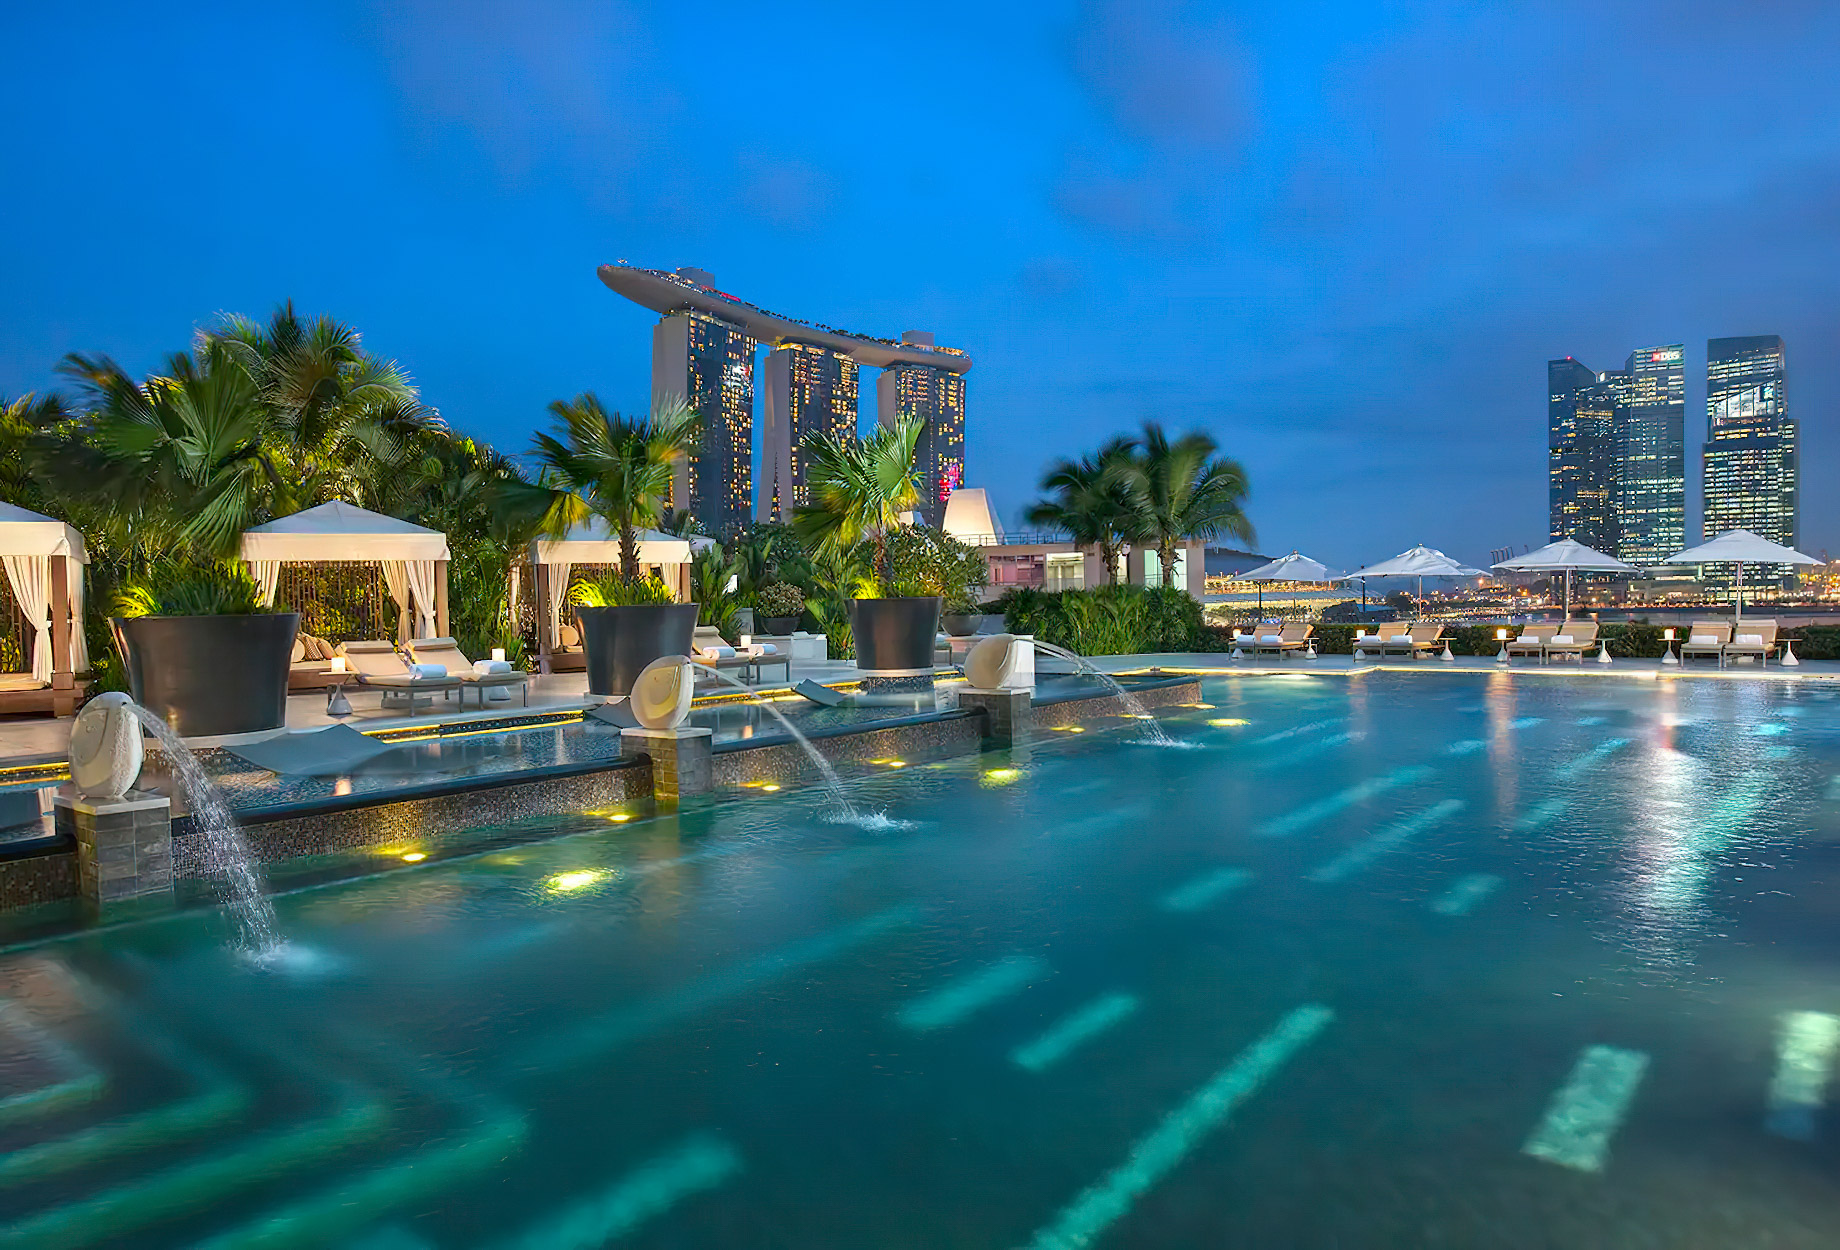 Mandarin Oriental, Singapore Hotel - Singapore - Exterior Pool Night